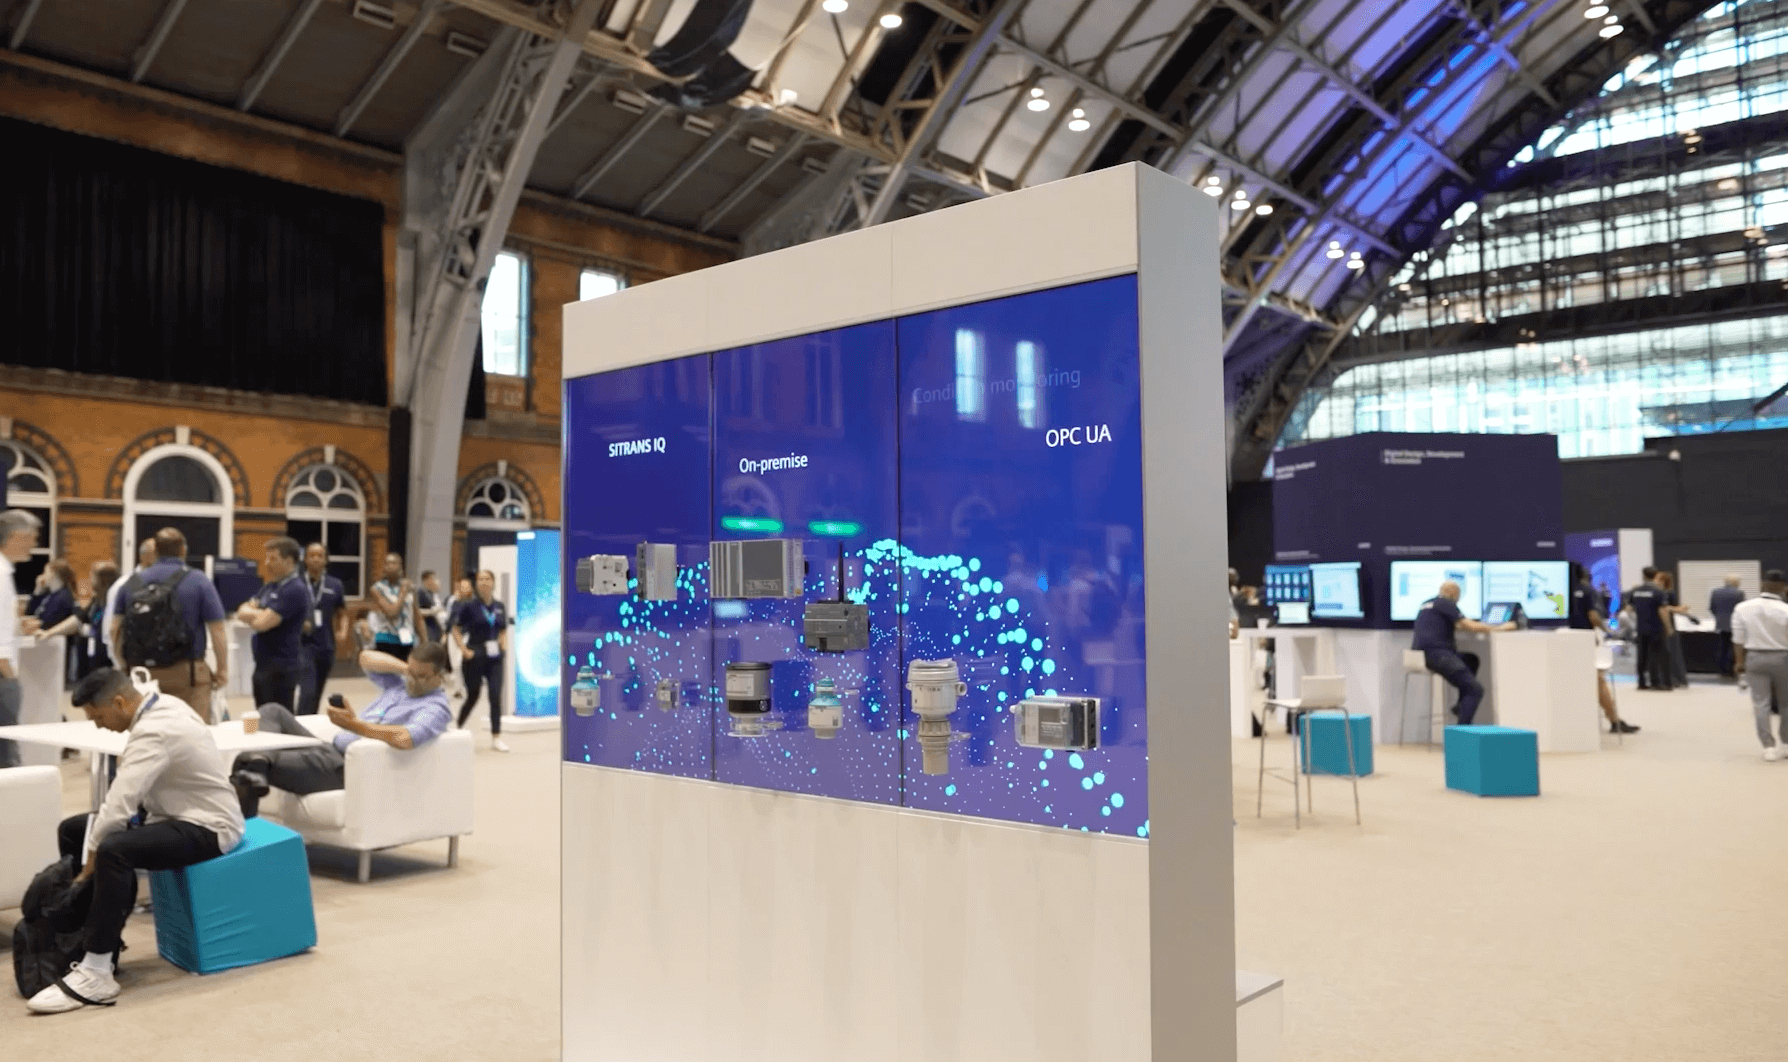 A Siemens digital wall display at a congress